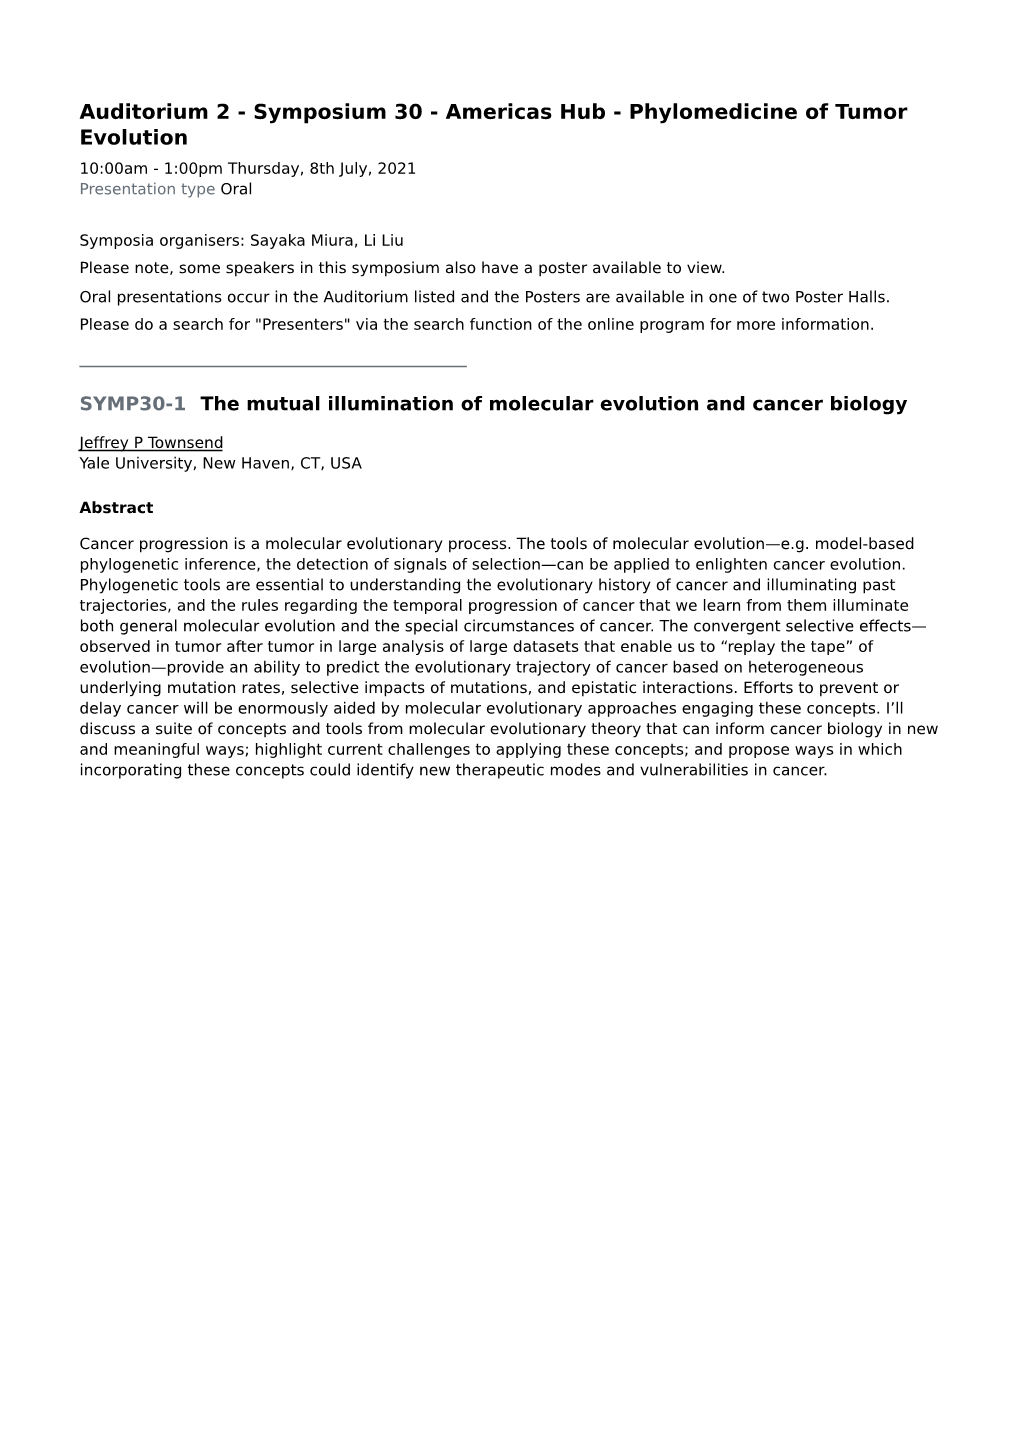 Phylomedicine of Tumor Evolution 10:00Am - 1:00Pm Thursday, 8Th July, 2021 Presentation Type Oral